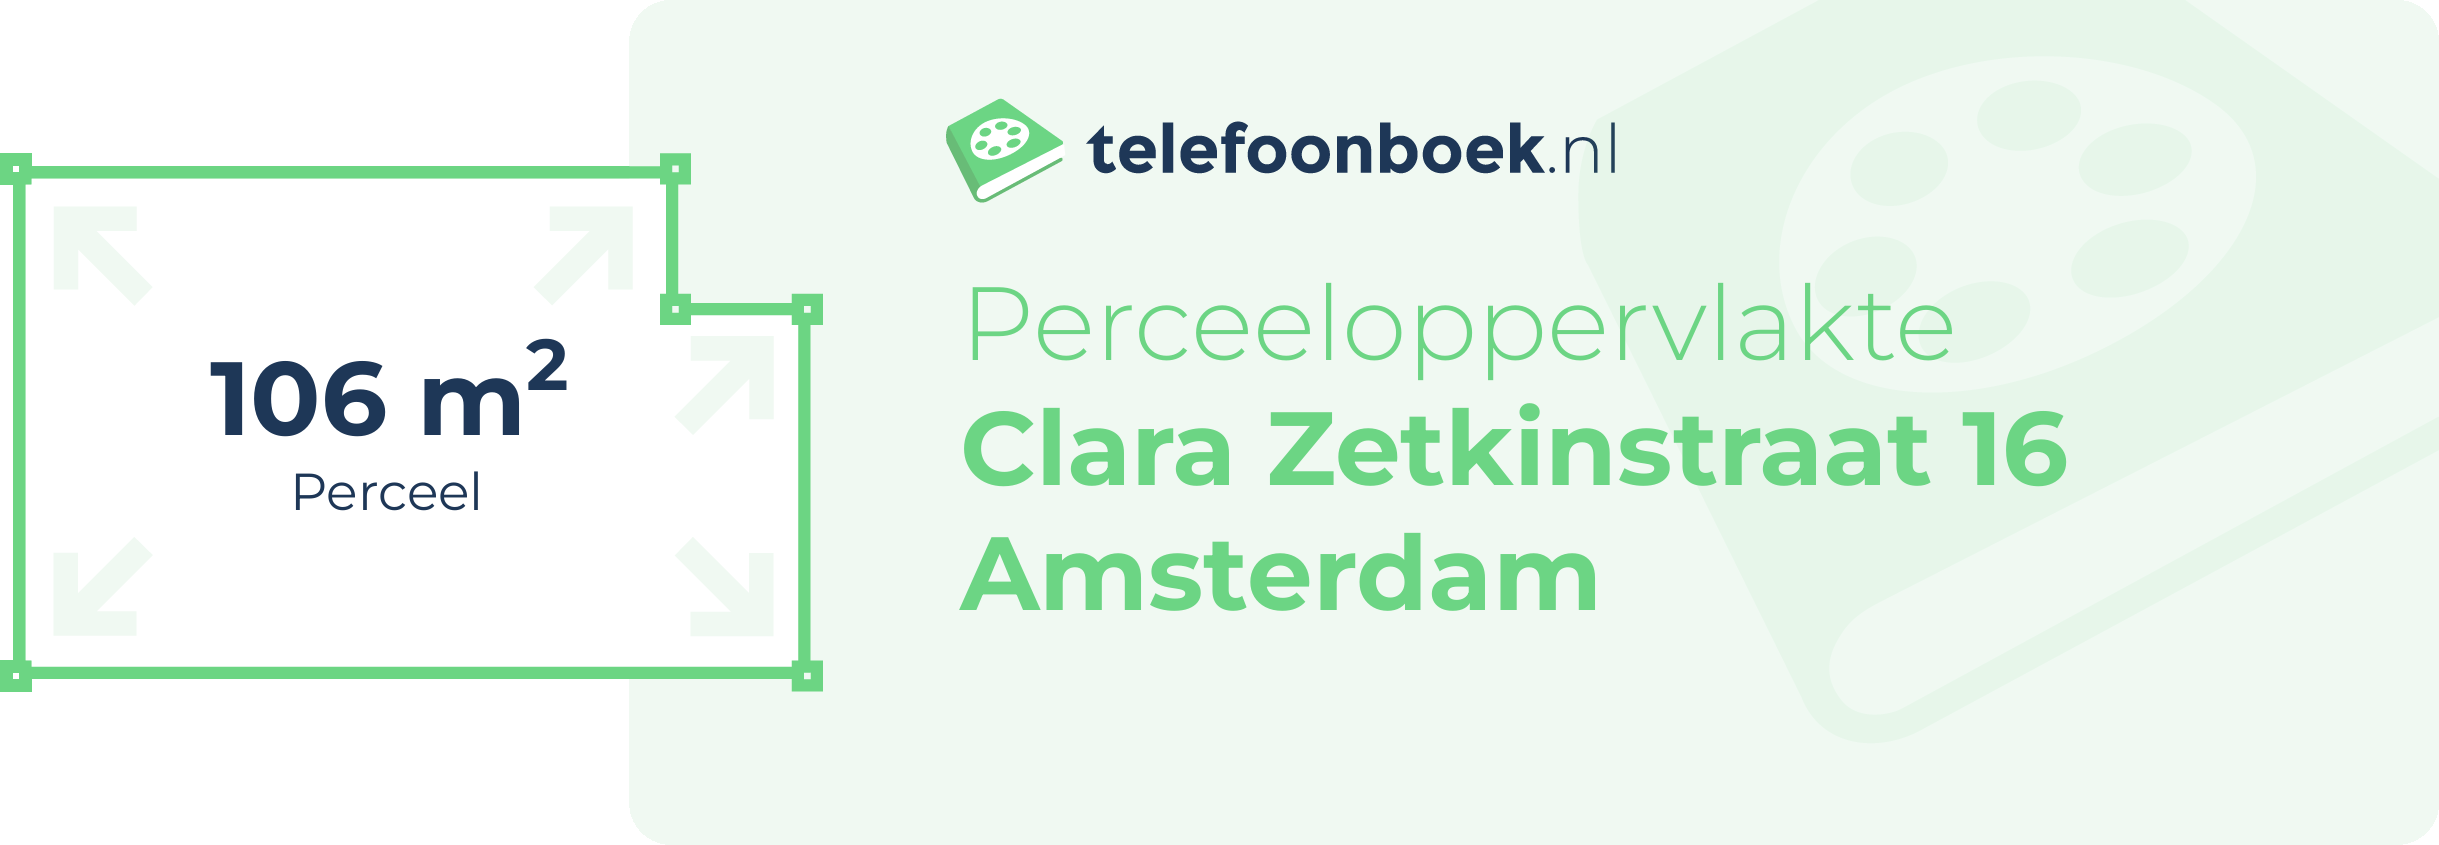 Perceeloppervlakte Clara Zetkinstraat 16 Amsterdam